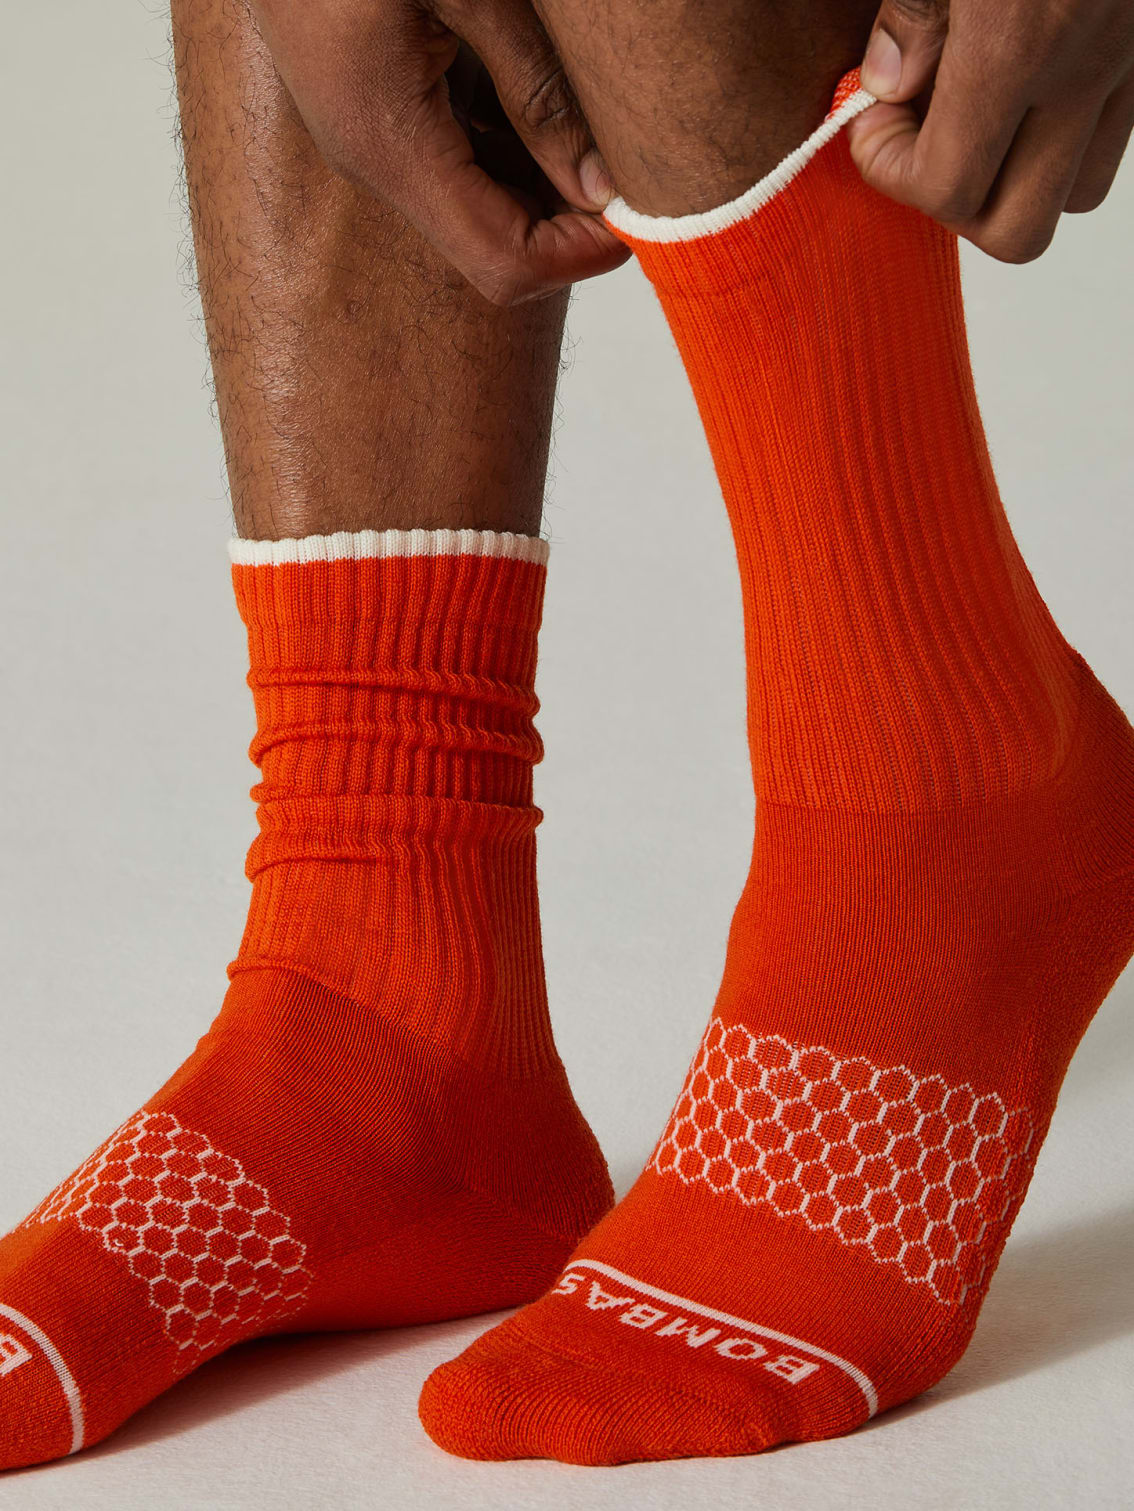 Athletic Works Men's Ankle Socks 12 Pack